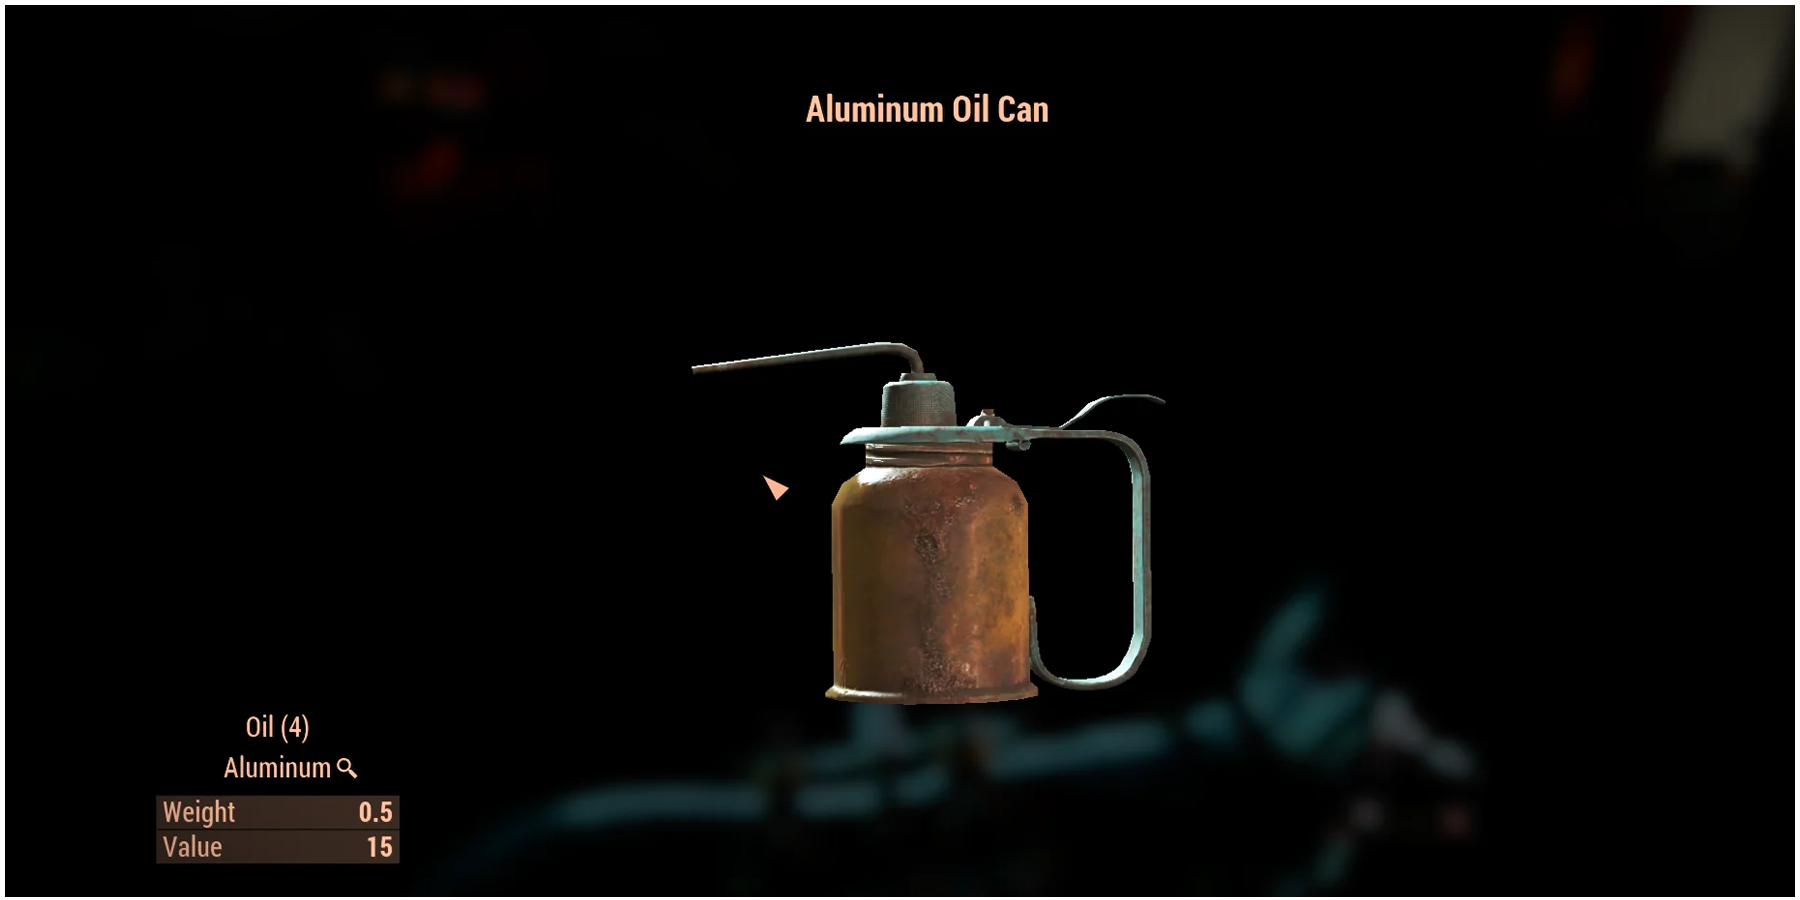 Aluminuum Oil Can